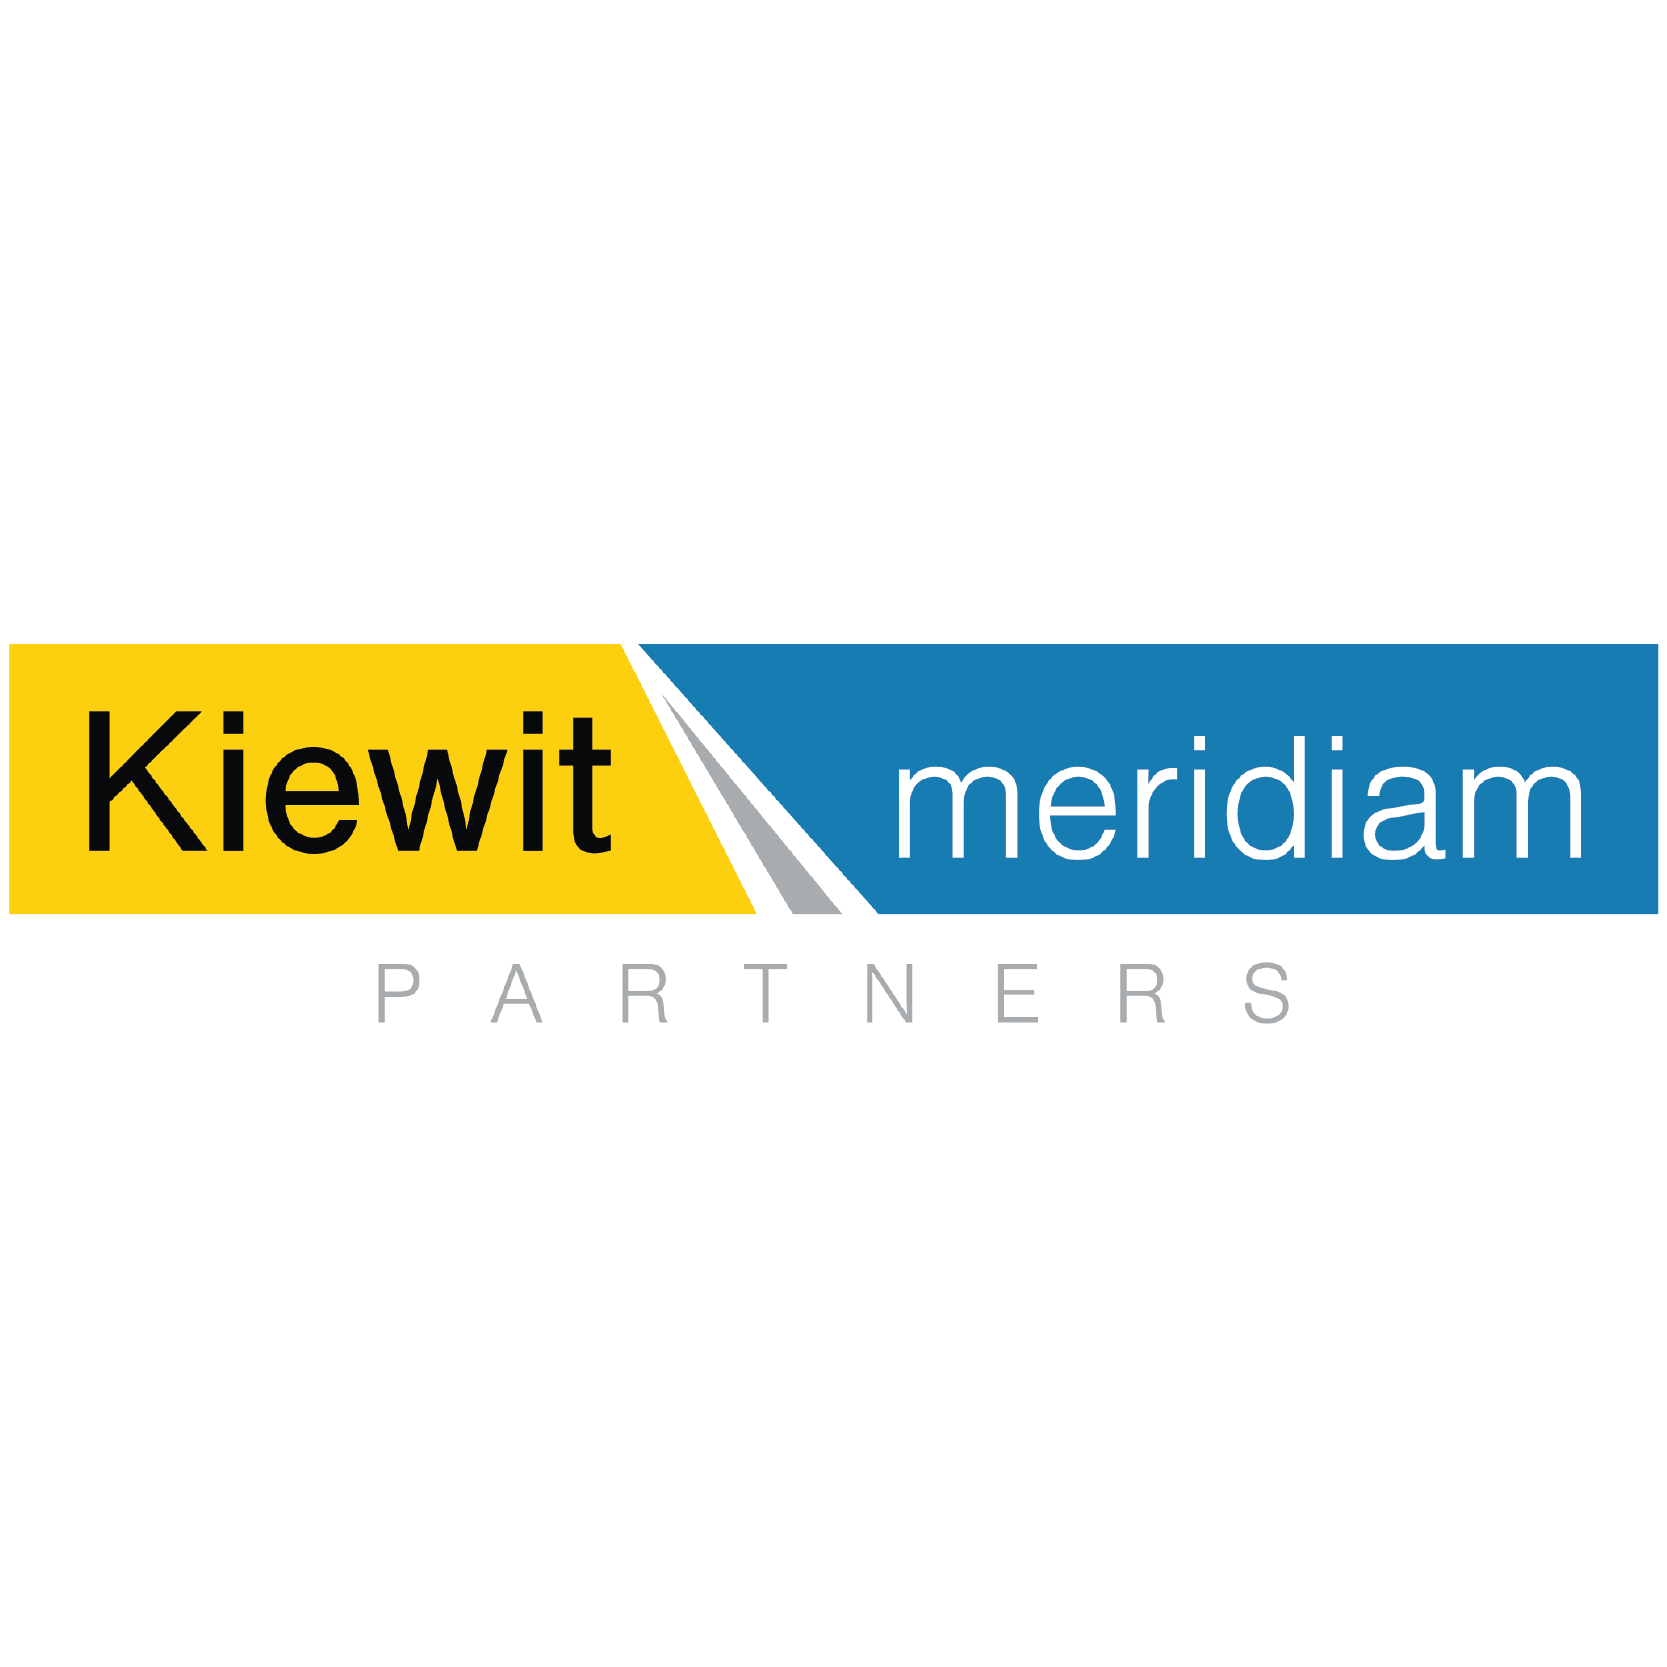 Kiewit Meridiam Partners